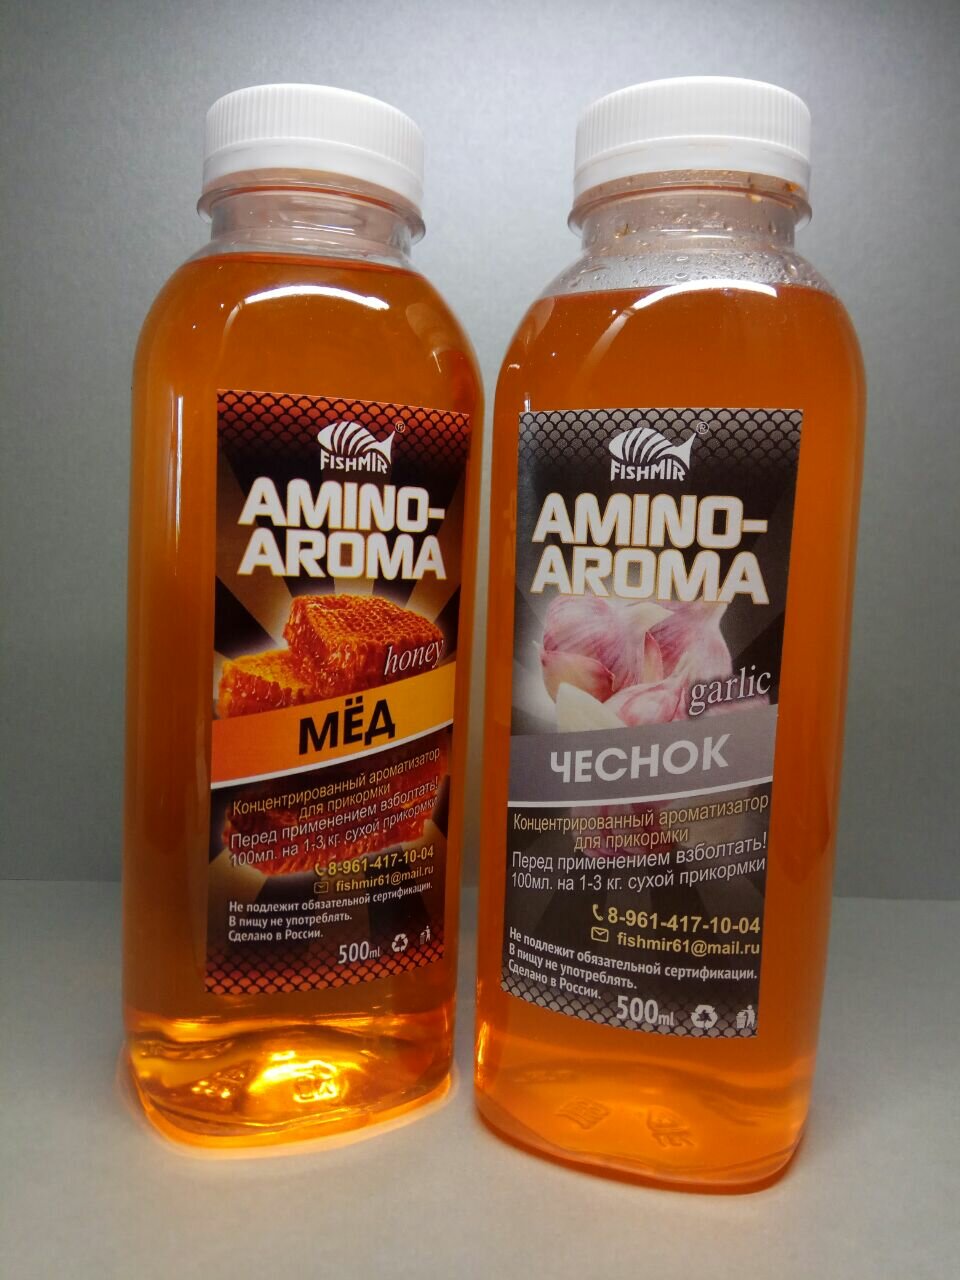 "МЁД" и "чеснок" набор ароматизаторов для прикормки, 2 флакона по 500 мл, AMINO AROMA от FISHMIR